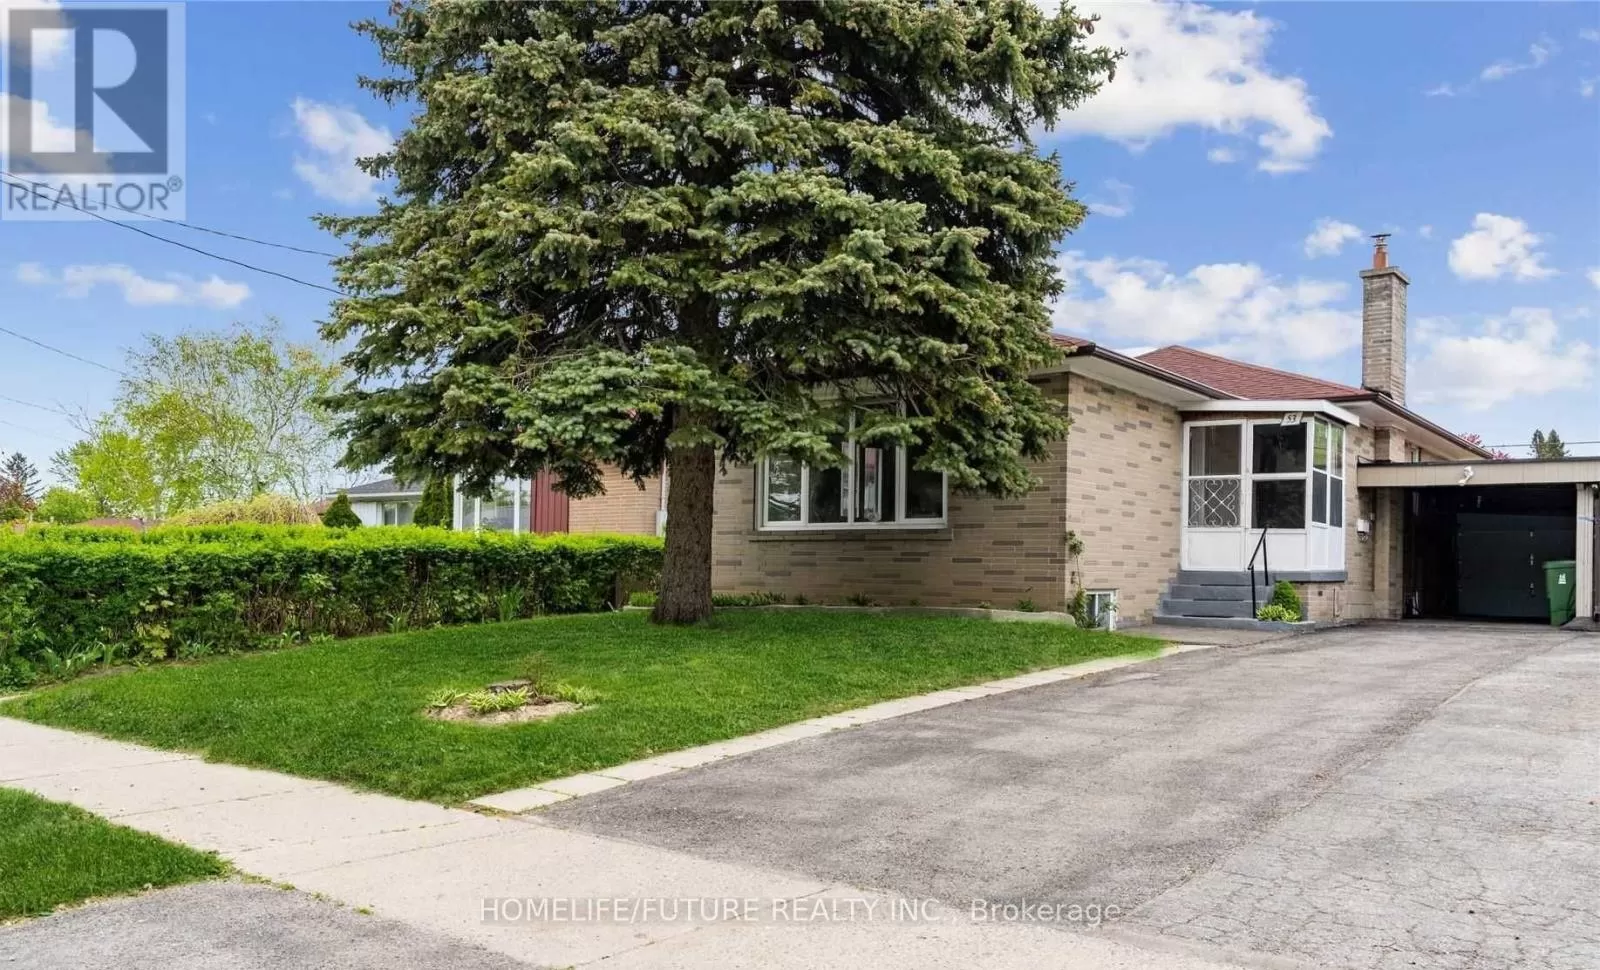 House for rent: #bsmt -53 Citadel Dr, Toronto, Ontario M1K 4S3